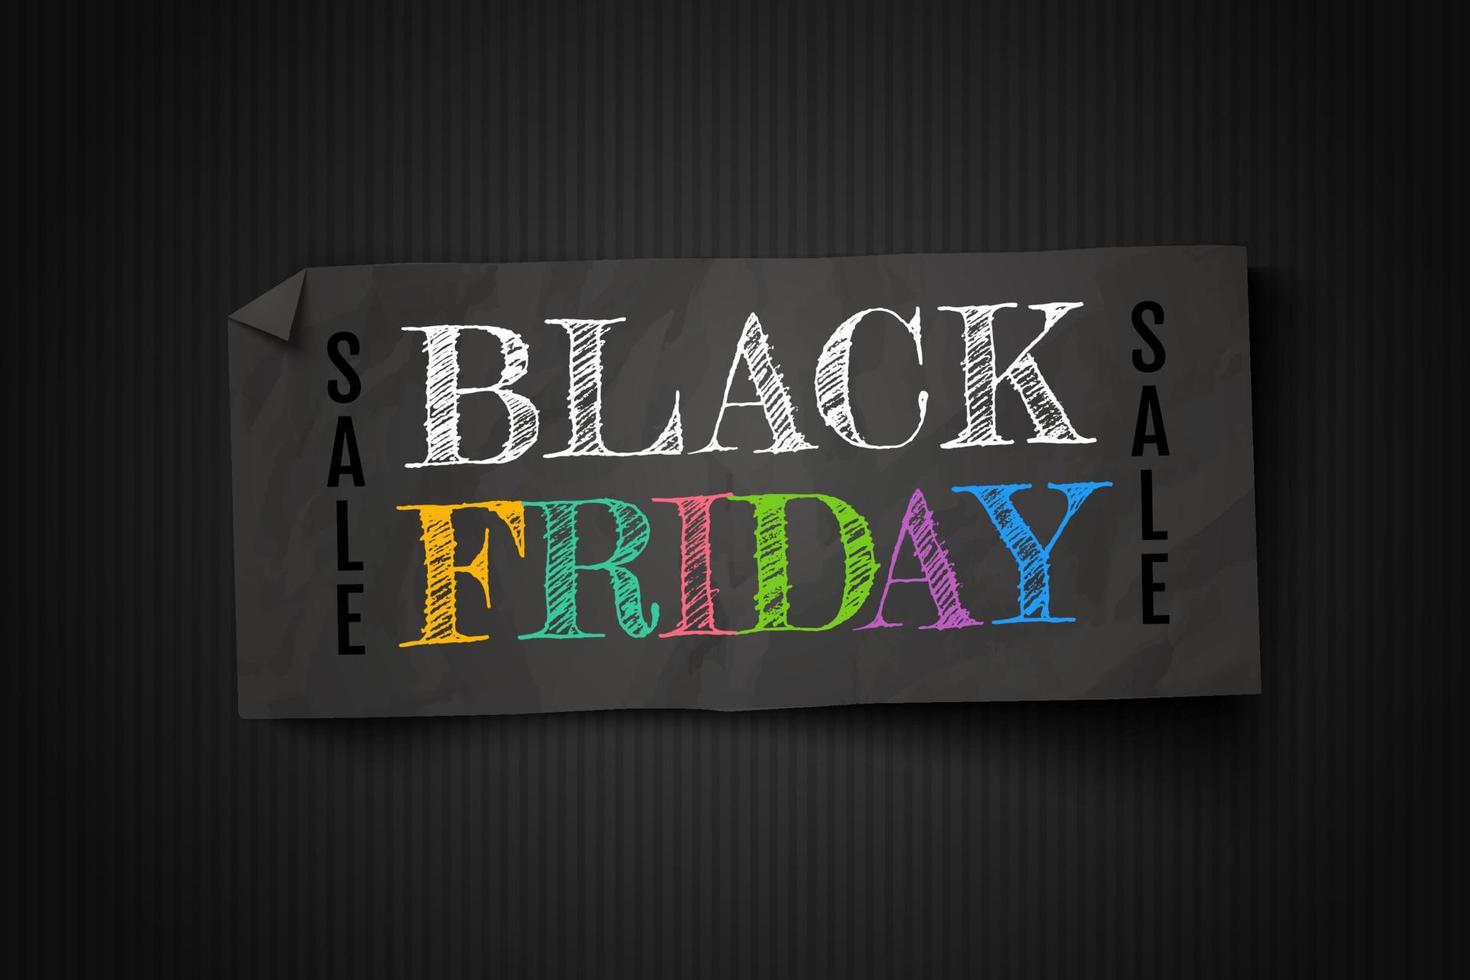 Black Friday-verkoop vector